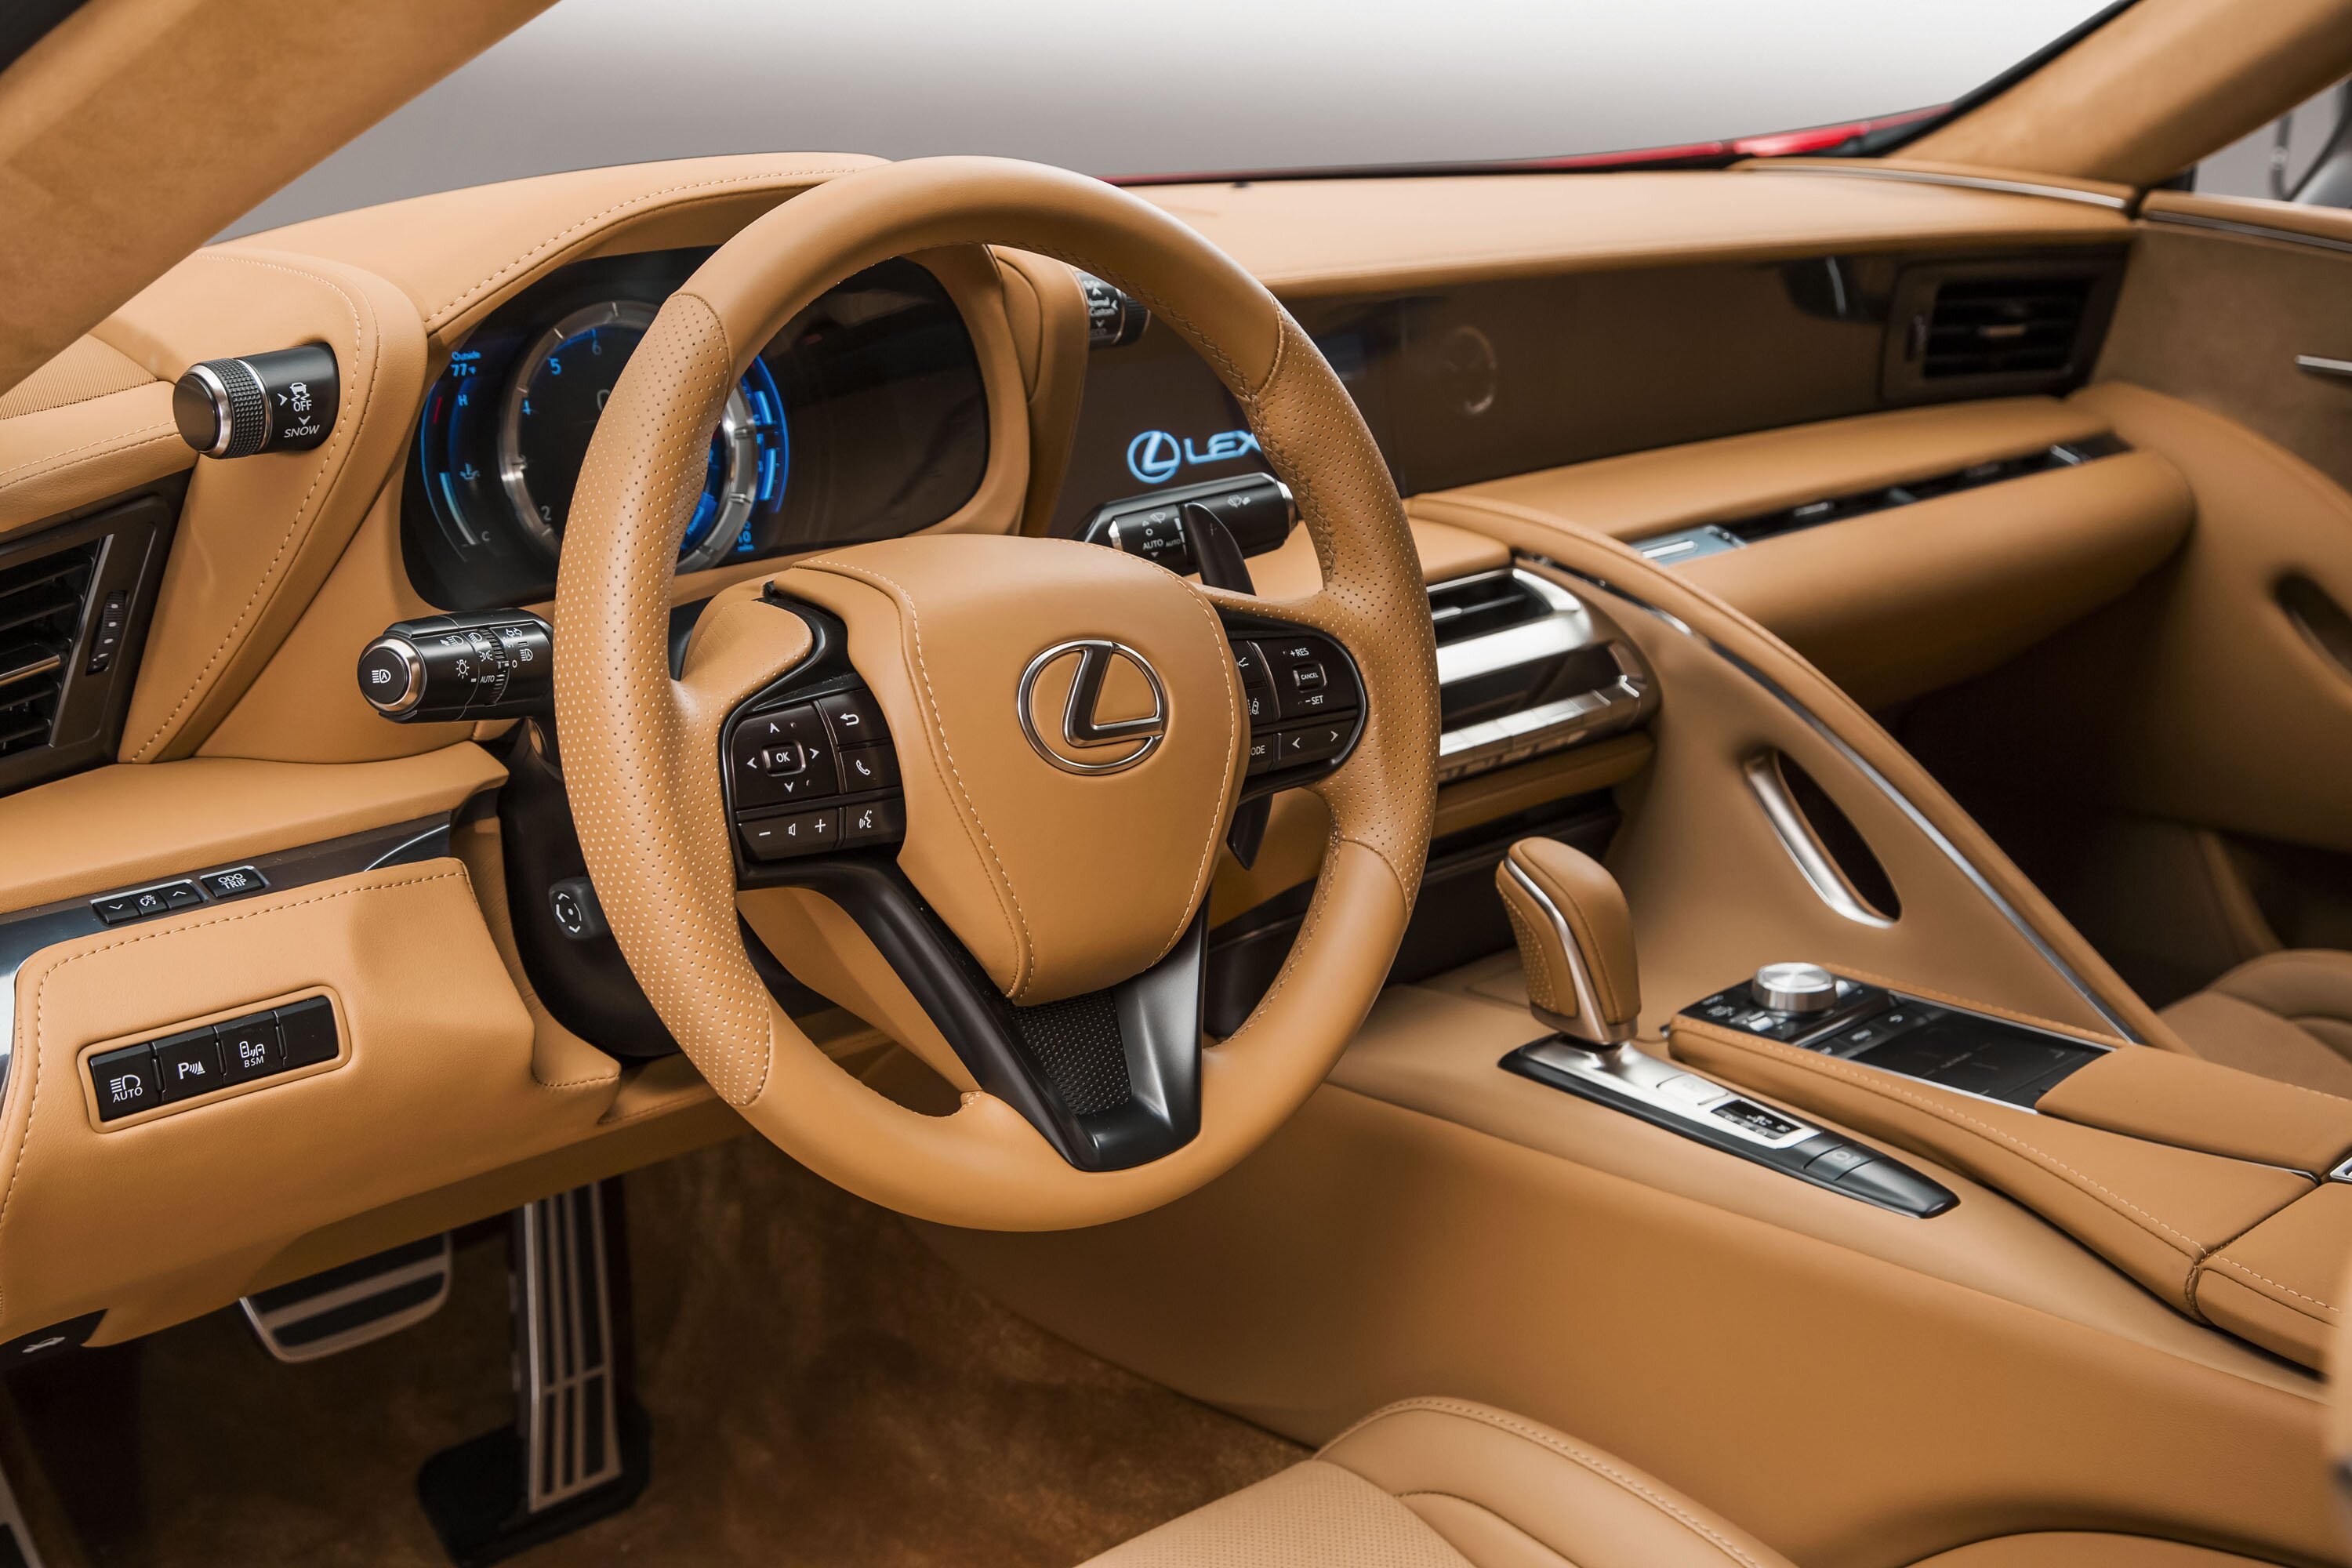 The interior of the Lexus LC 500 is a beautiful amalgam of leather, aluminium and cutting edge tech